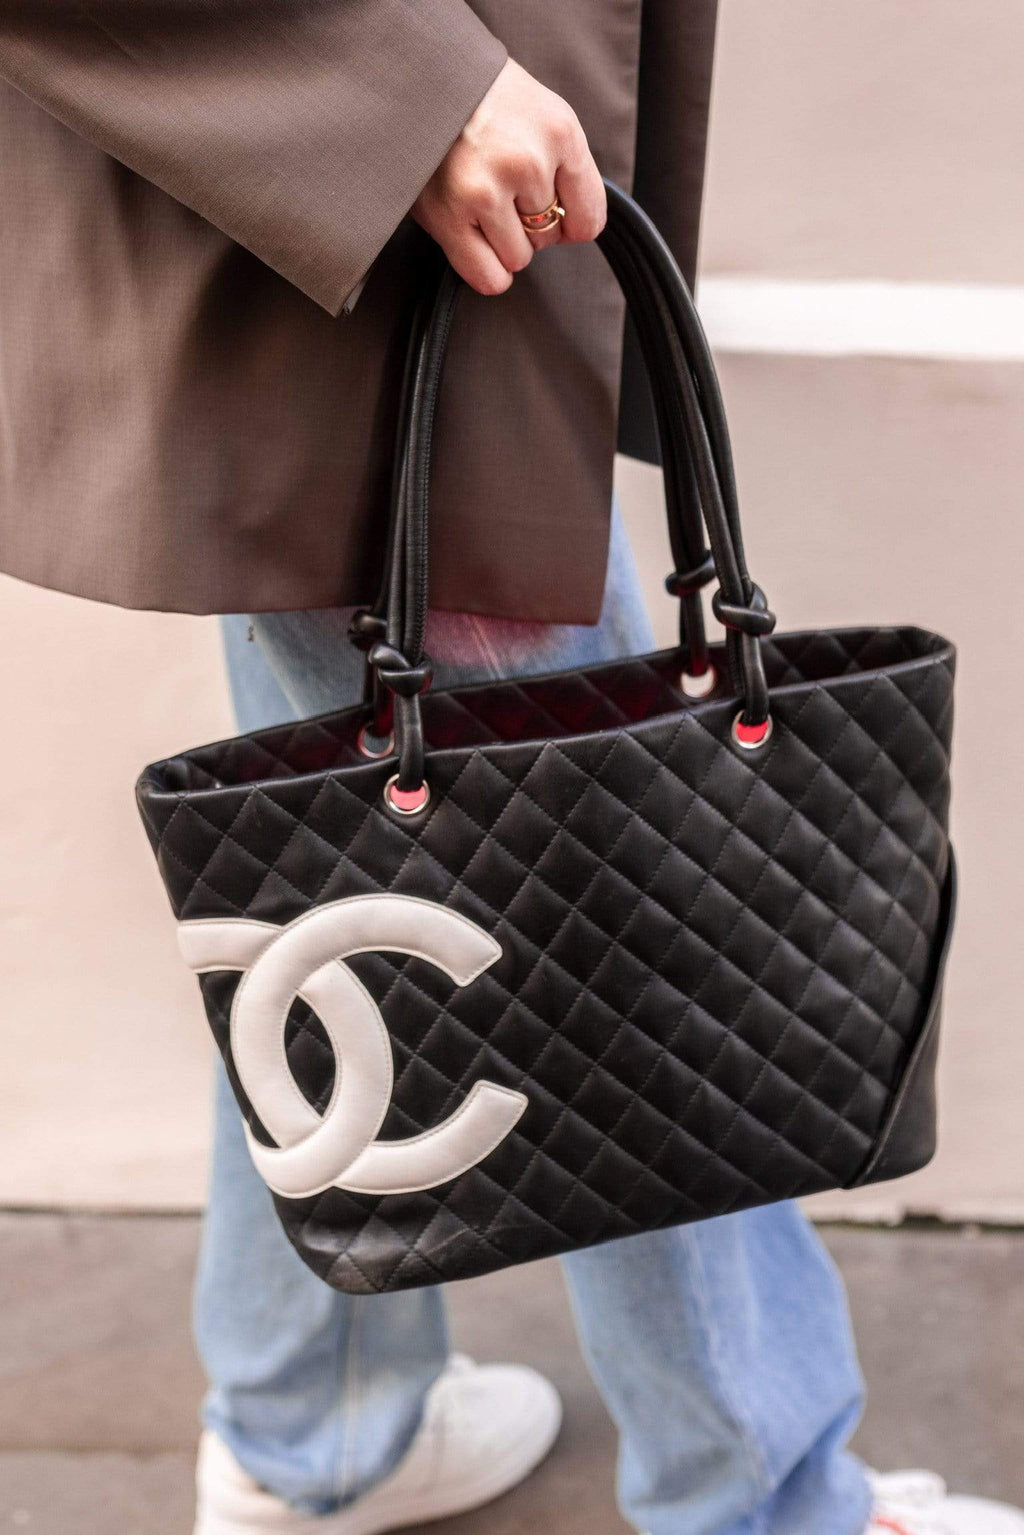 Chanel Cambon Tote Est Retail Price 4900  Borealis Luxury